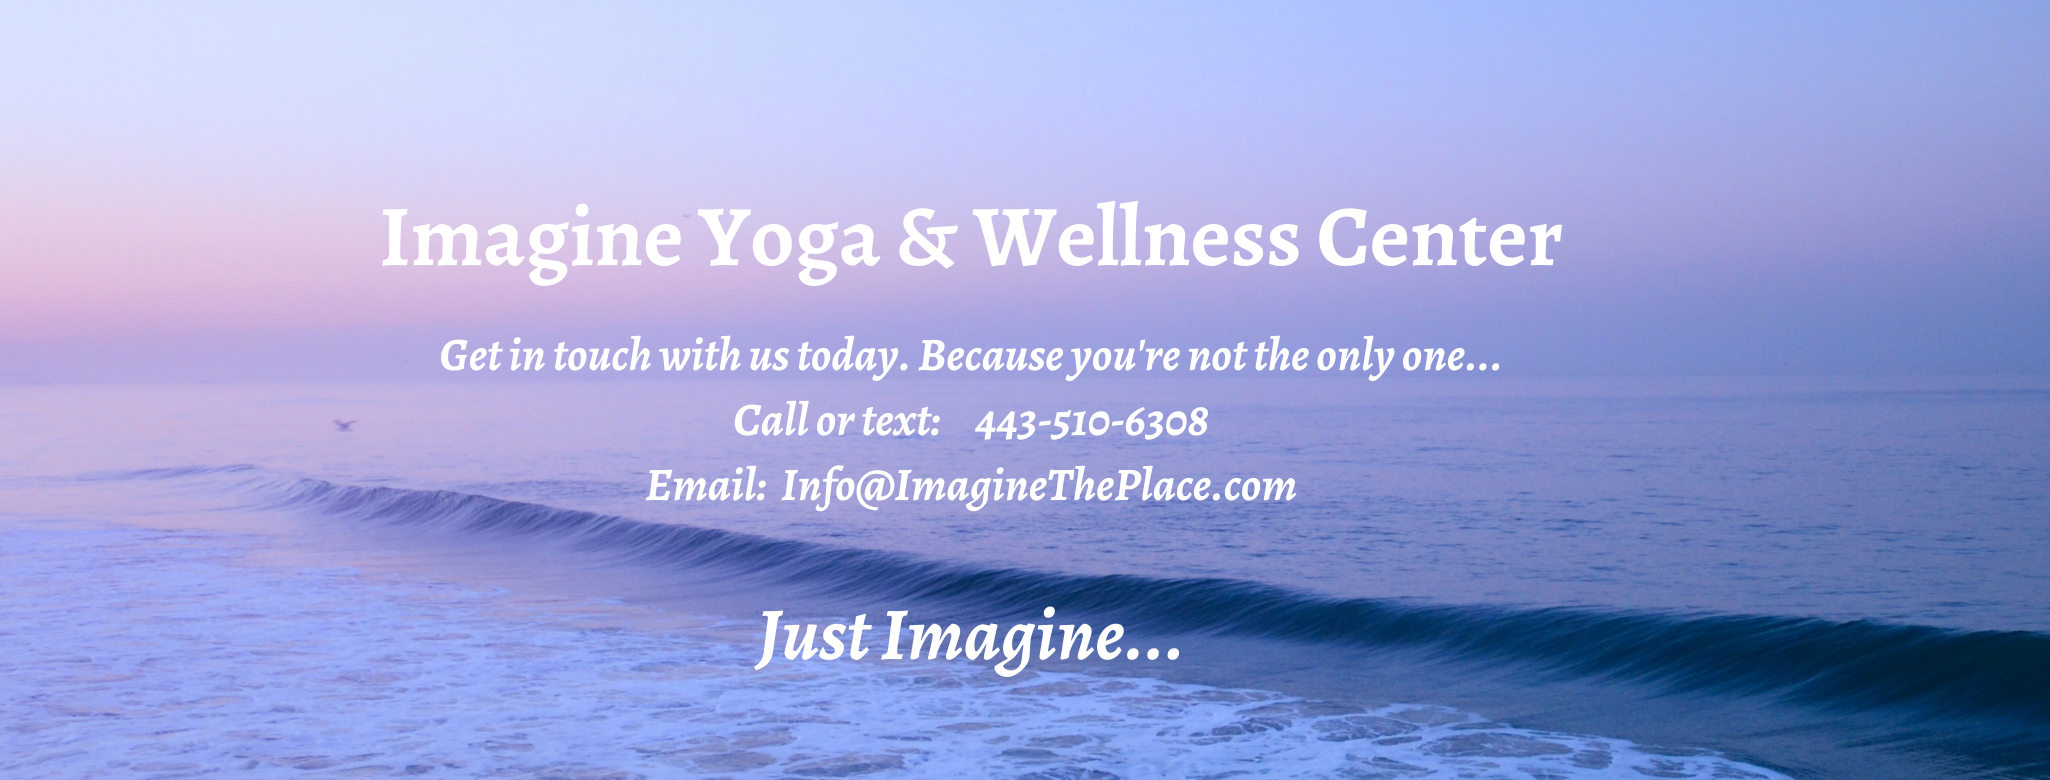 Imagine Yoga & Wellness Center (2)